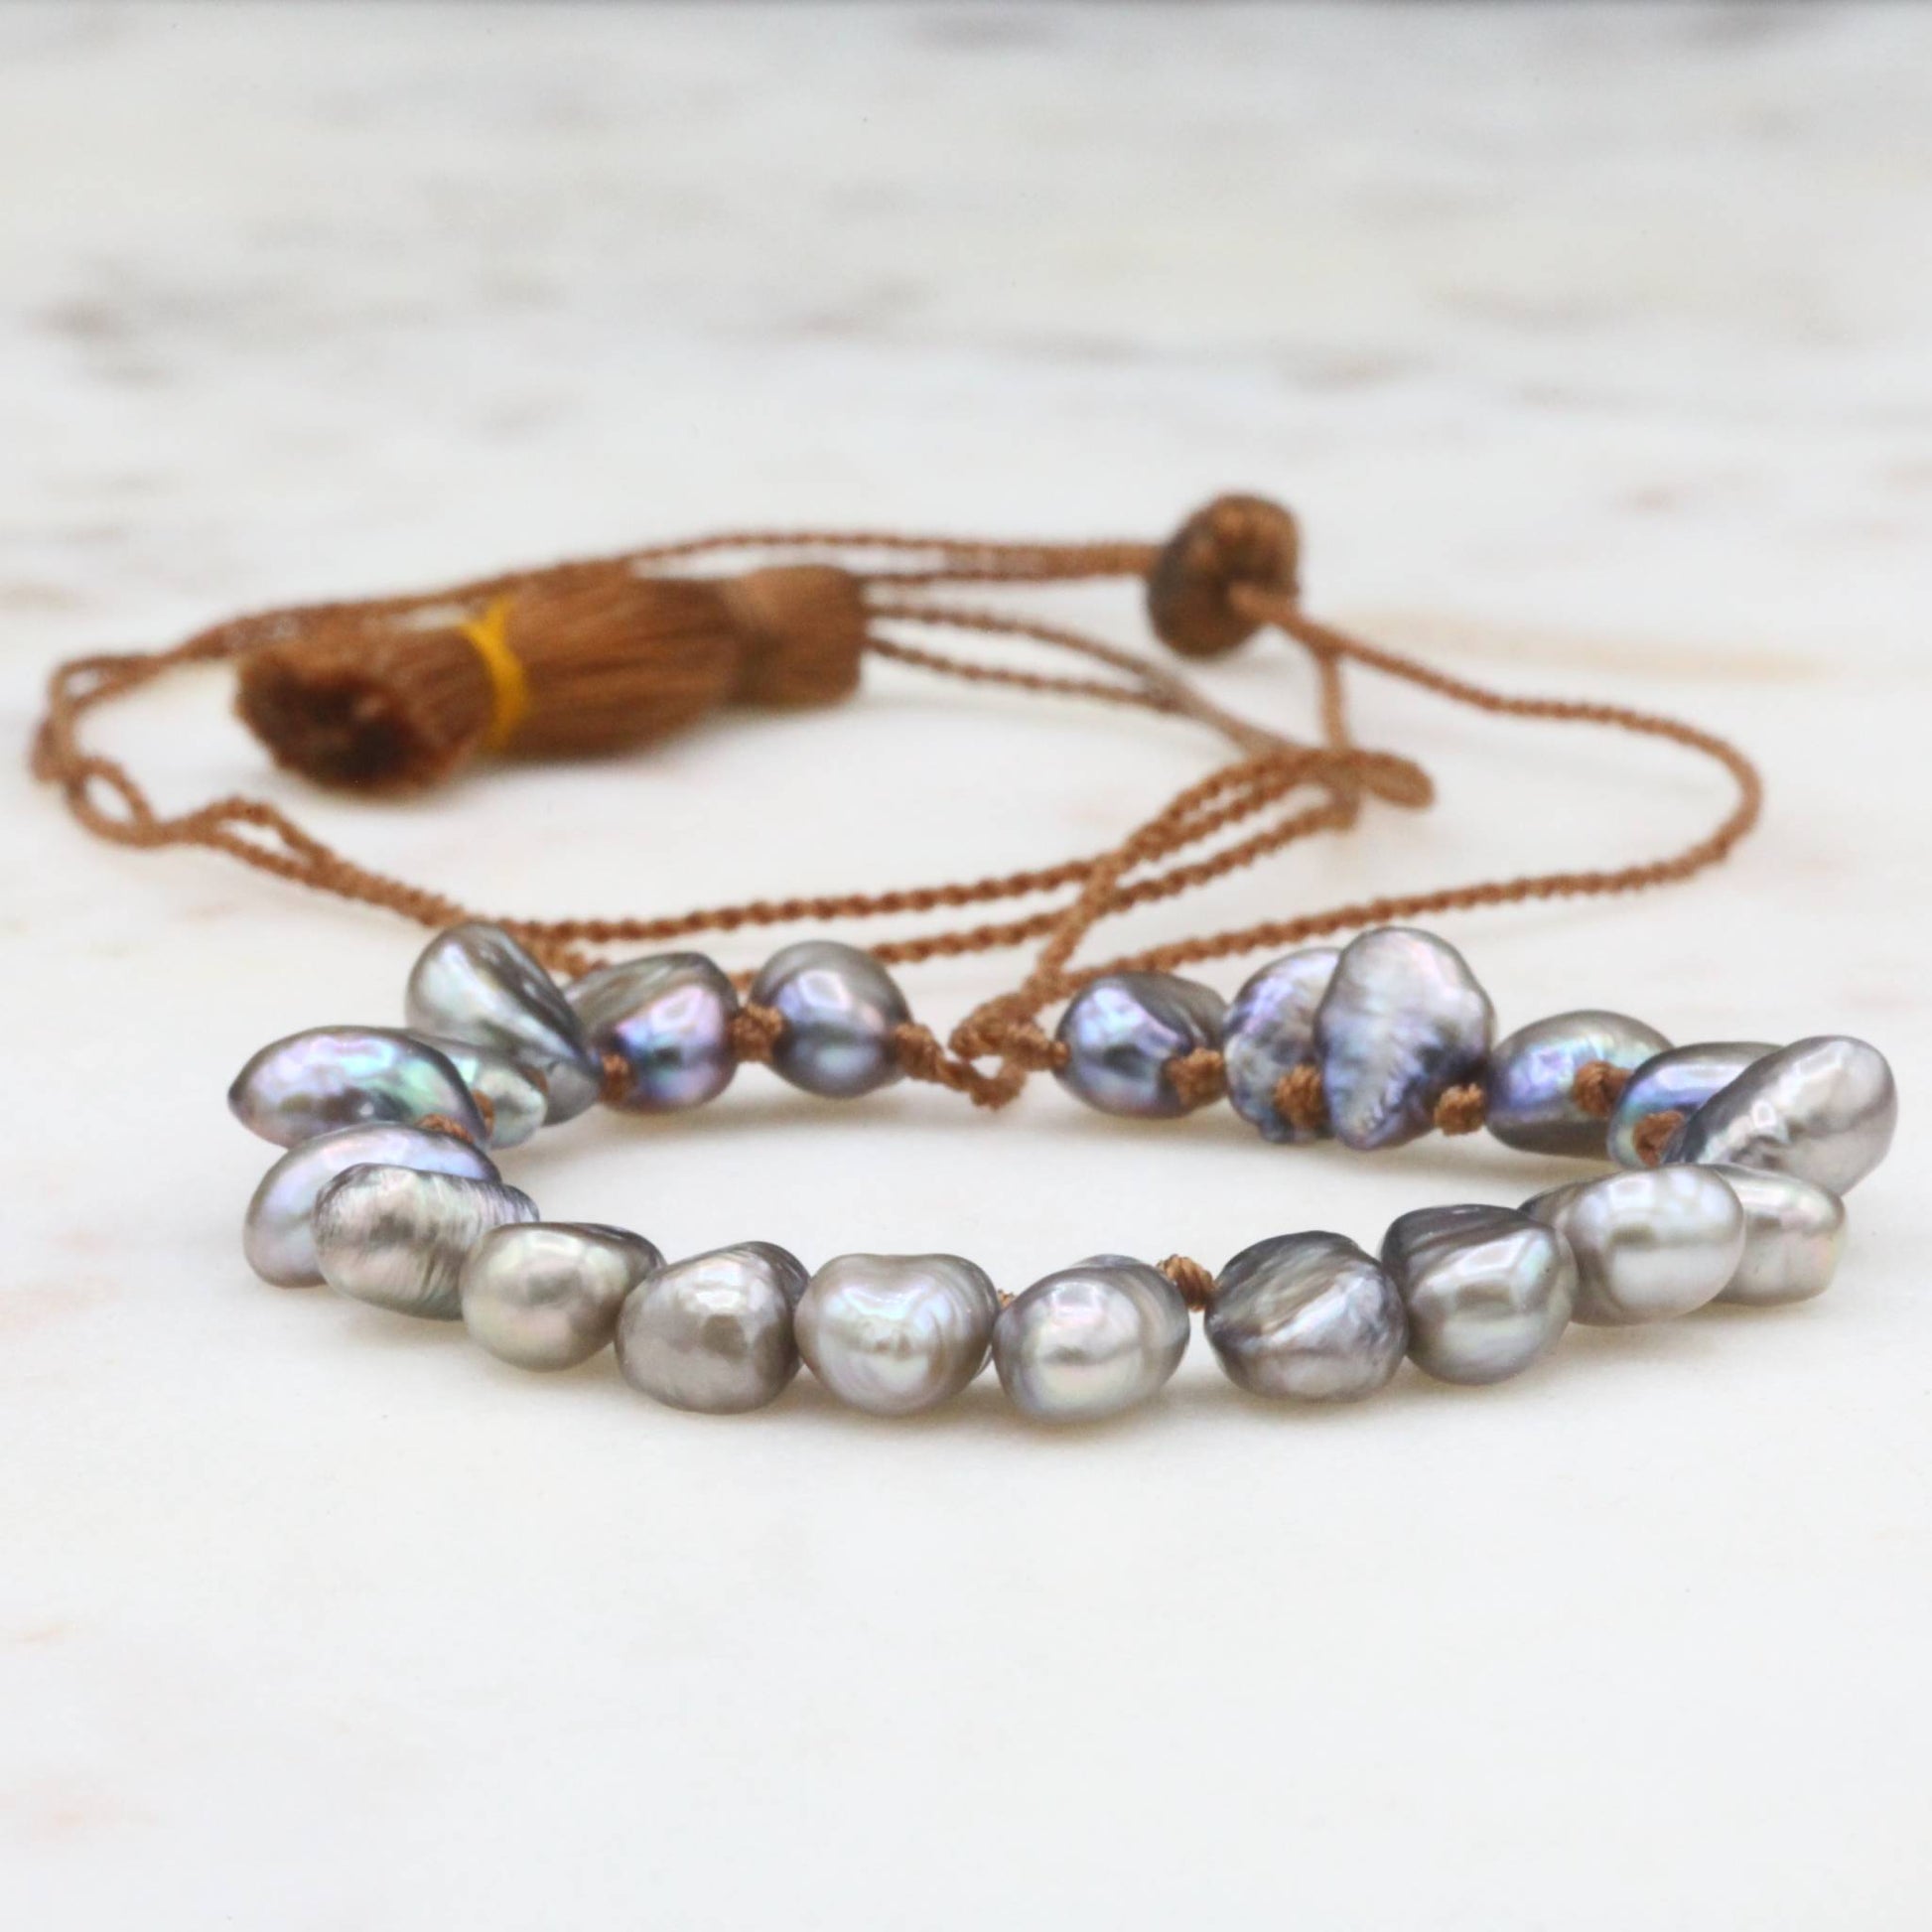 Lena Skadegard Jewels | Floating Grey Pearl Tassel Necklace | Firecracker